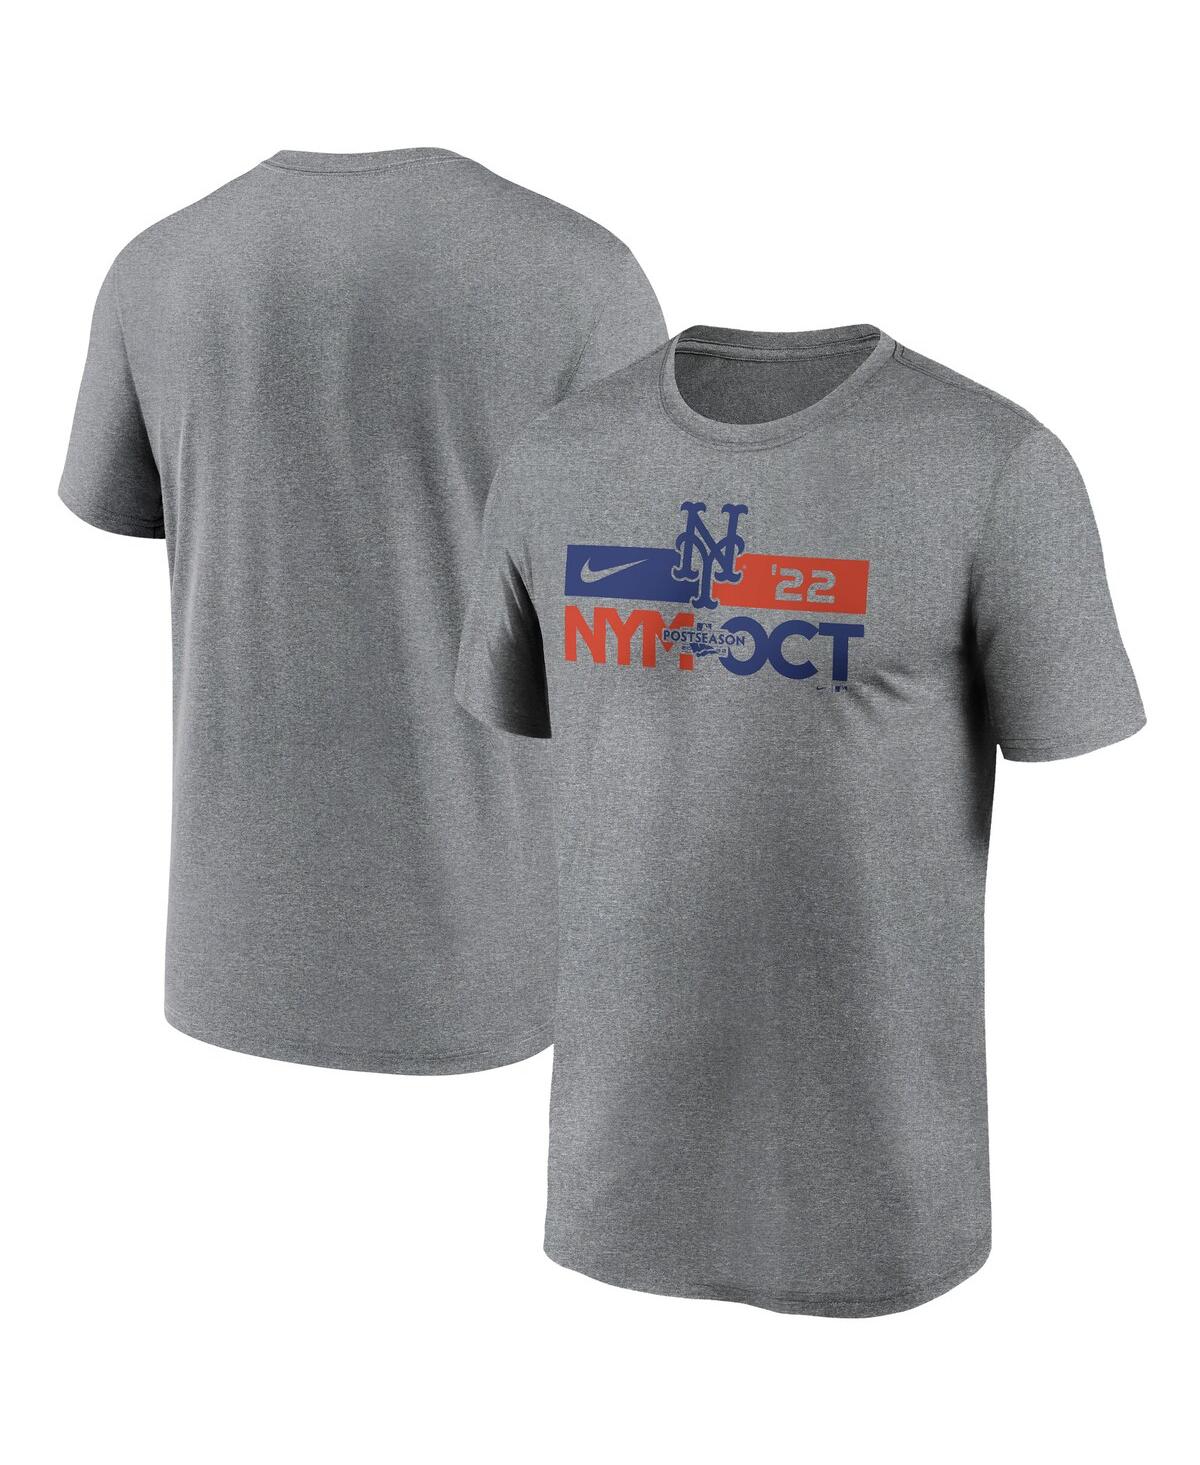 Men's Nike Heather Charcoal New York Mets 2022 Postseason T-shirt